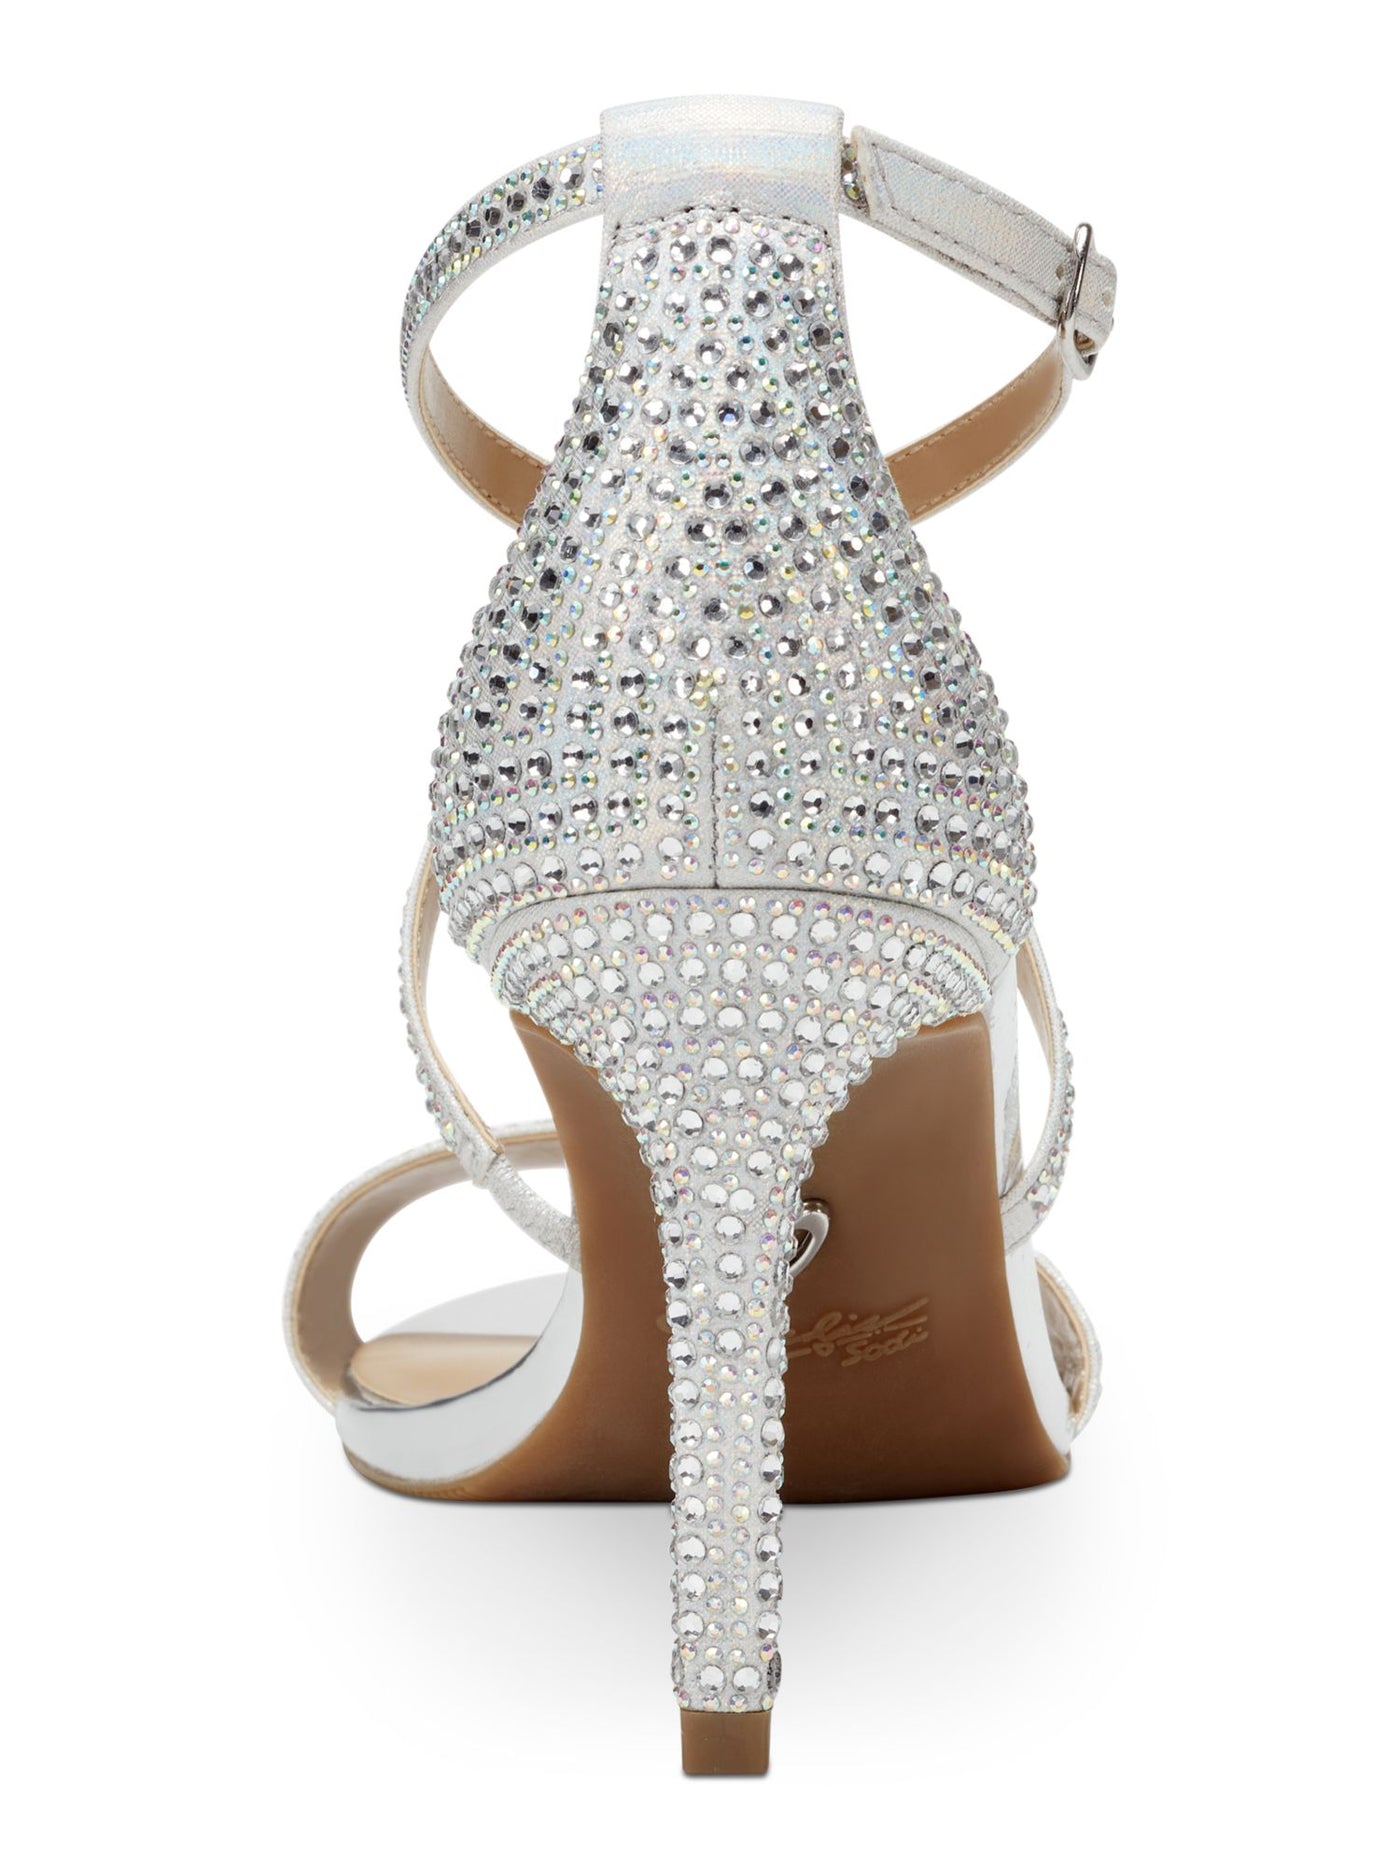 THALIA SODI Womens Silver Glitter Crisscross-Strapped Goring Padded Darria Round Toe Stiletto Buckle Dress Heeled Sandal 11 M